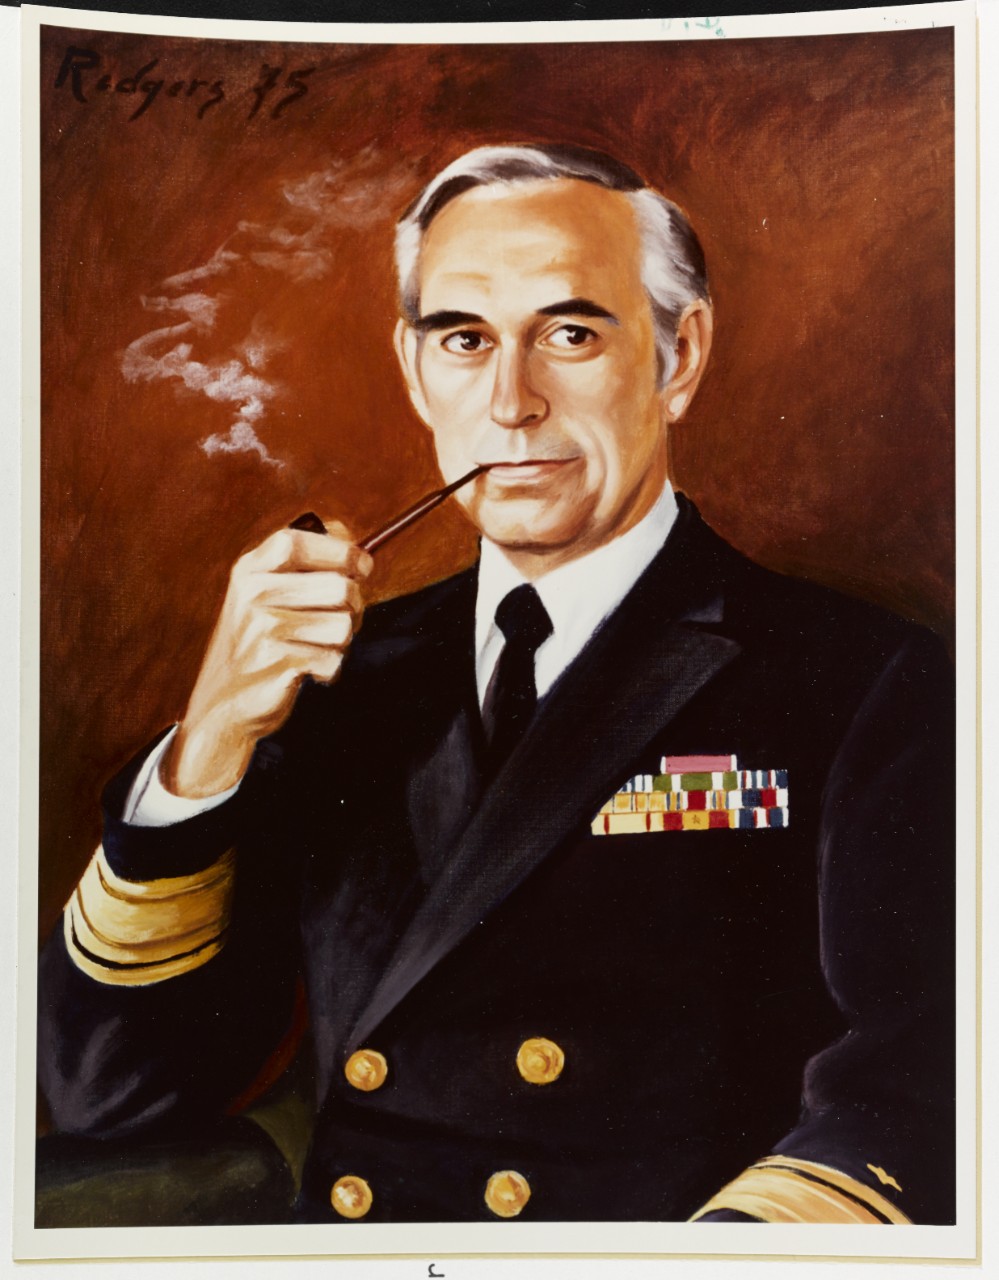 Rear Admiral Robert H. Wertheim, USN